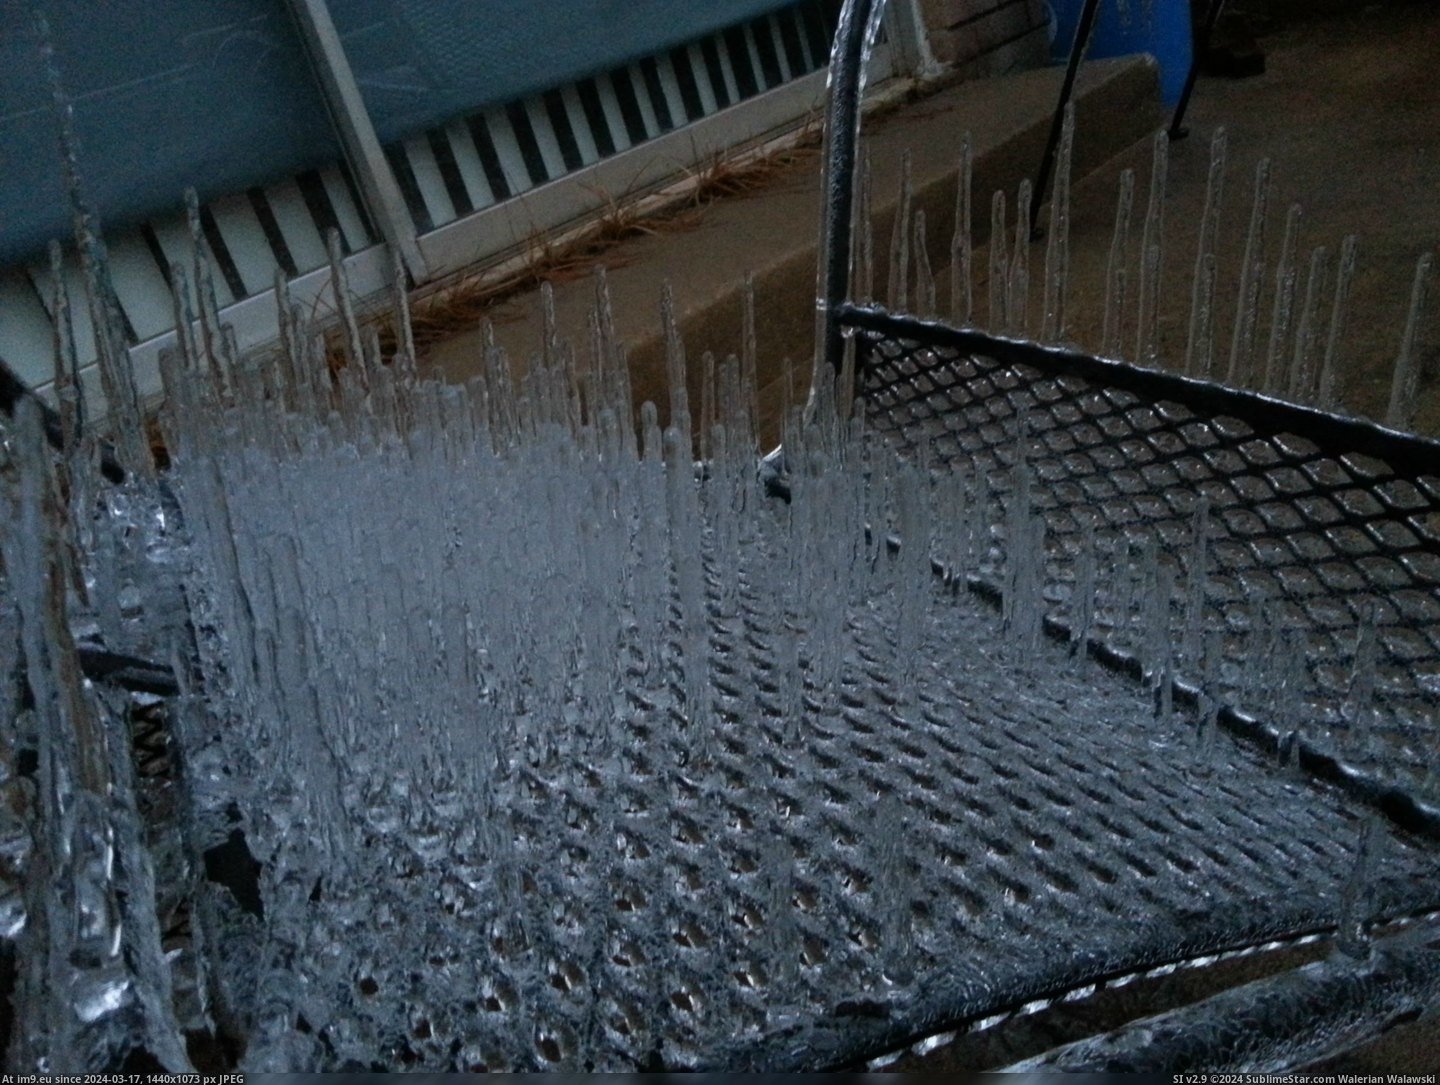 #Ice #Storm #Mesh #Furniture #Patio [Mildlyinteresting] This is what happens to mesh patio furniture in an ice storm 2 Pic. (Bild von album My r/MILDLYINTERESTING favs))